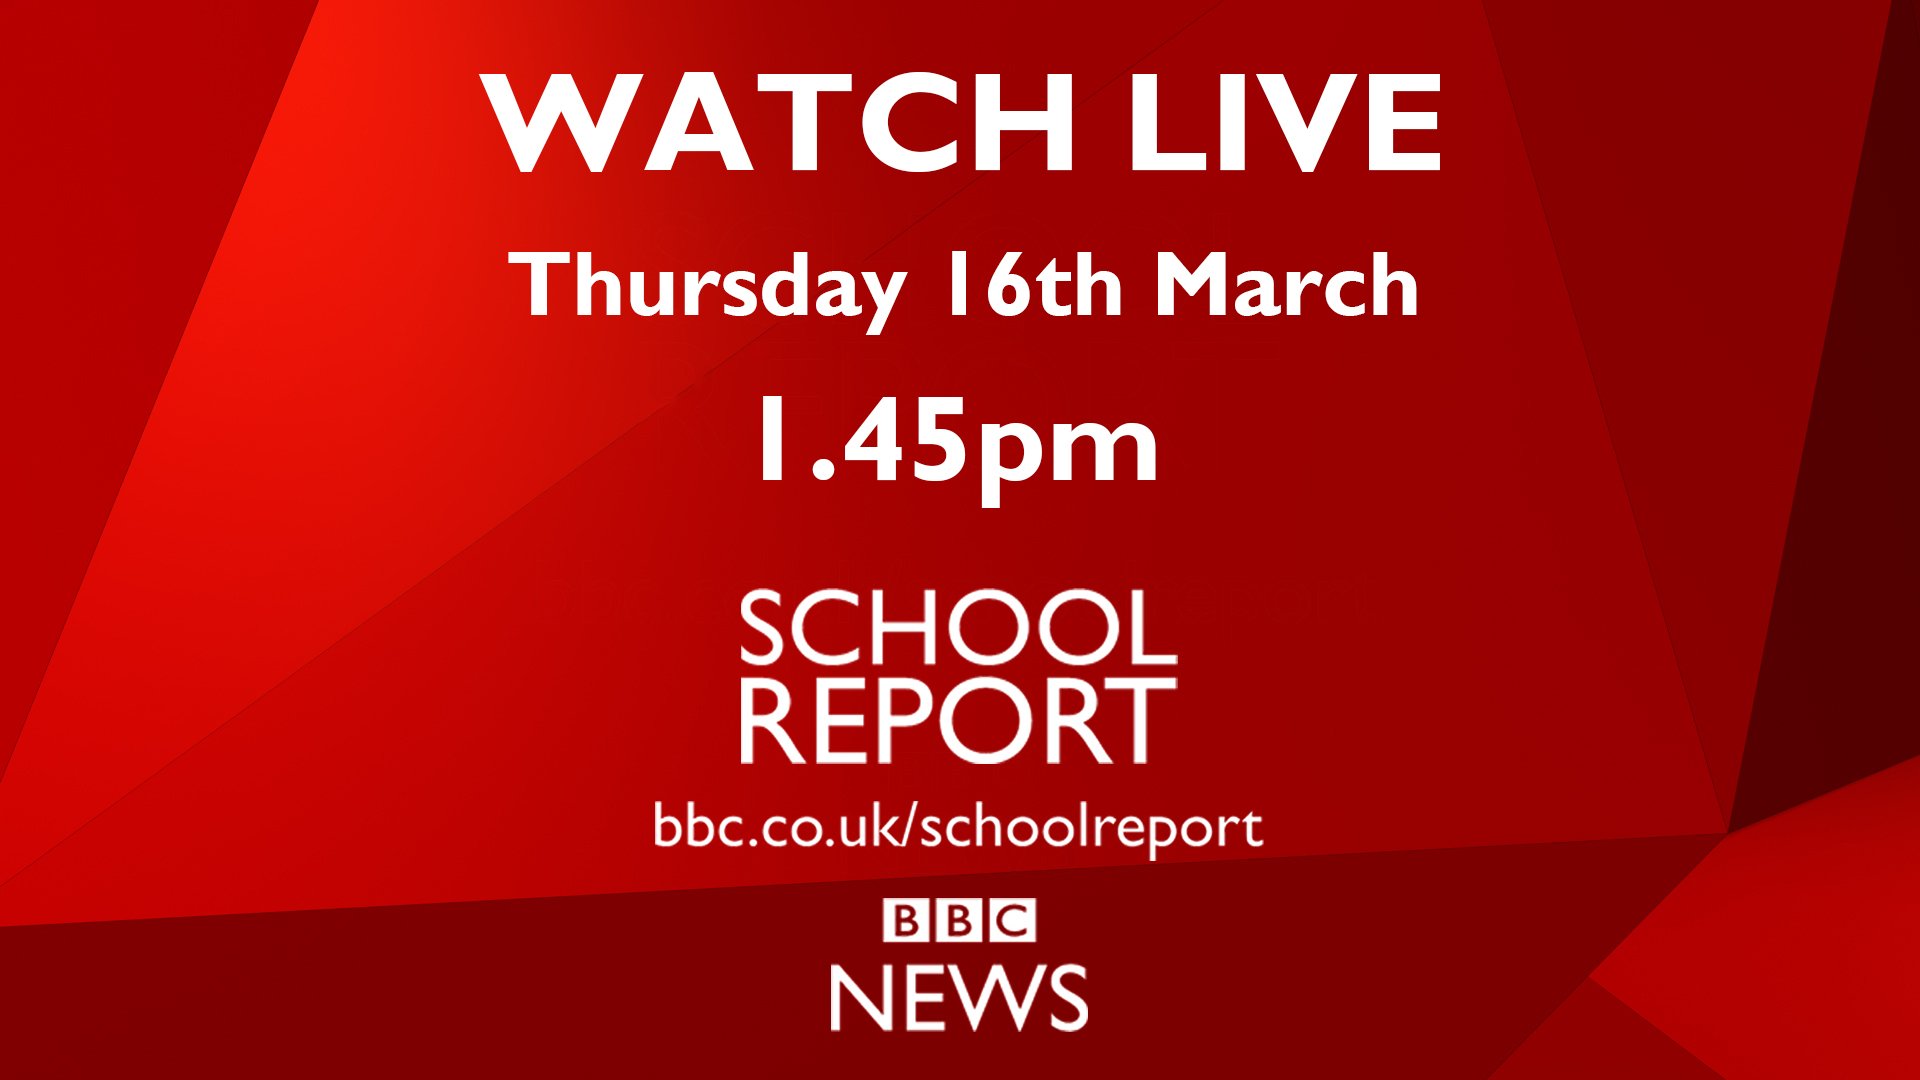 Watch Live - Thursday 16th March, 1.45pm SCHOOL REPORT bbc.co.uk/schoolreport BBC NEWS